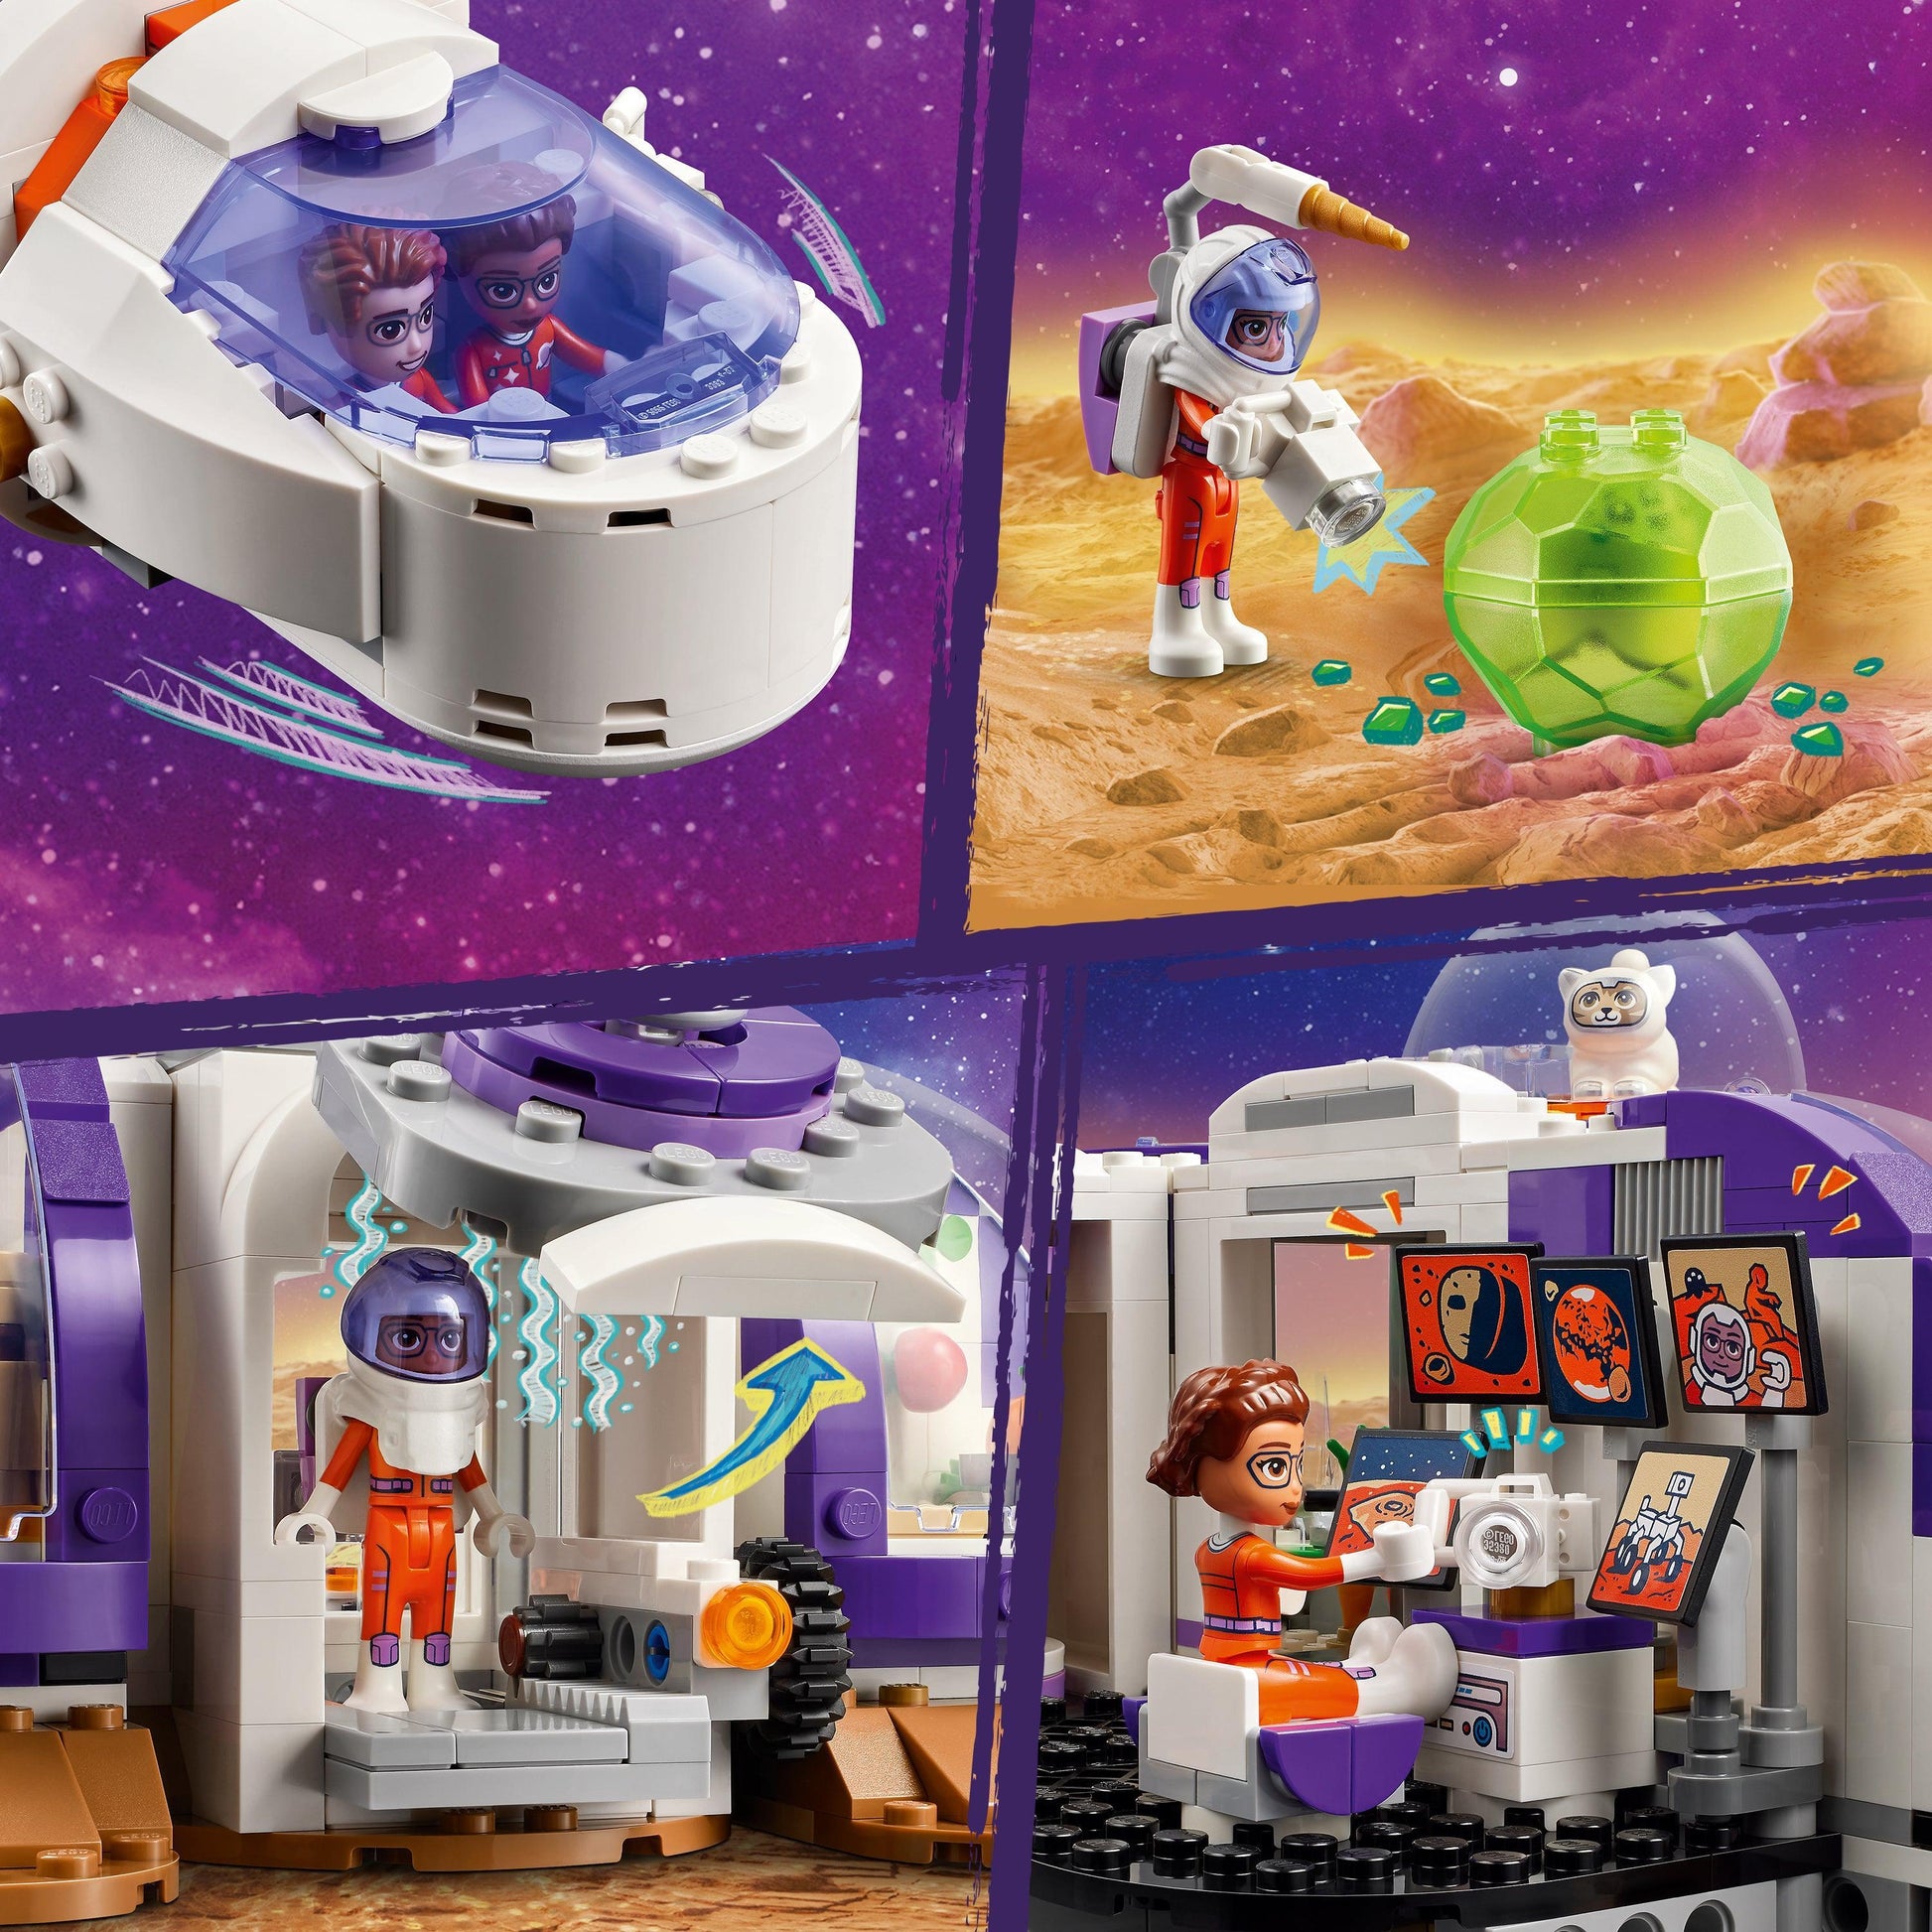 LEGO Ruimte station op mars met raket 42605 Friends | 2TTOYS ✓ Official shop<br>